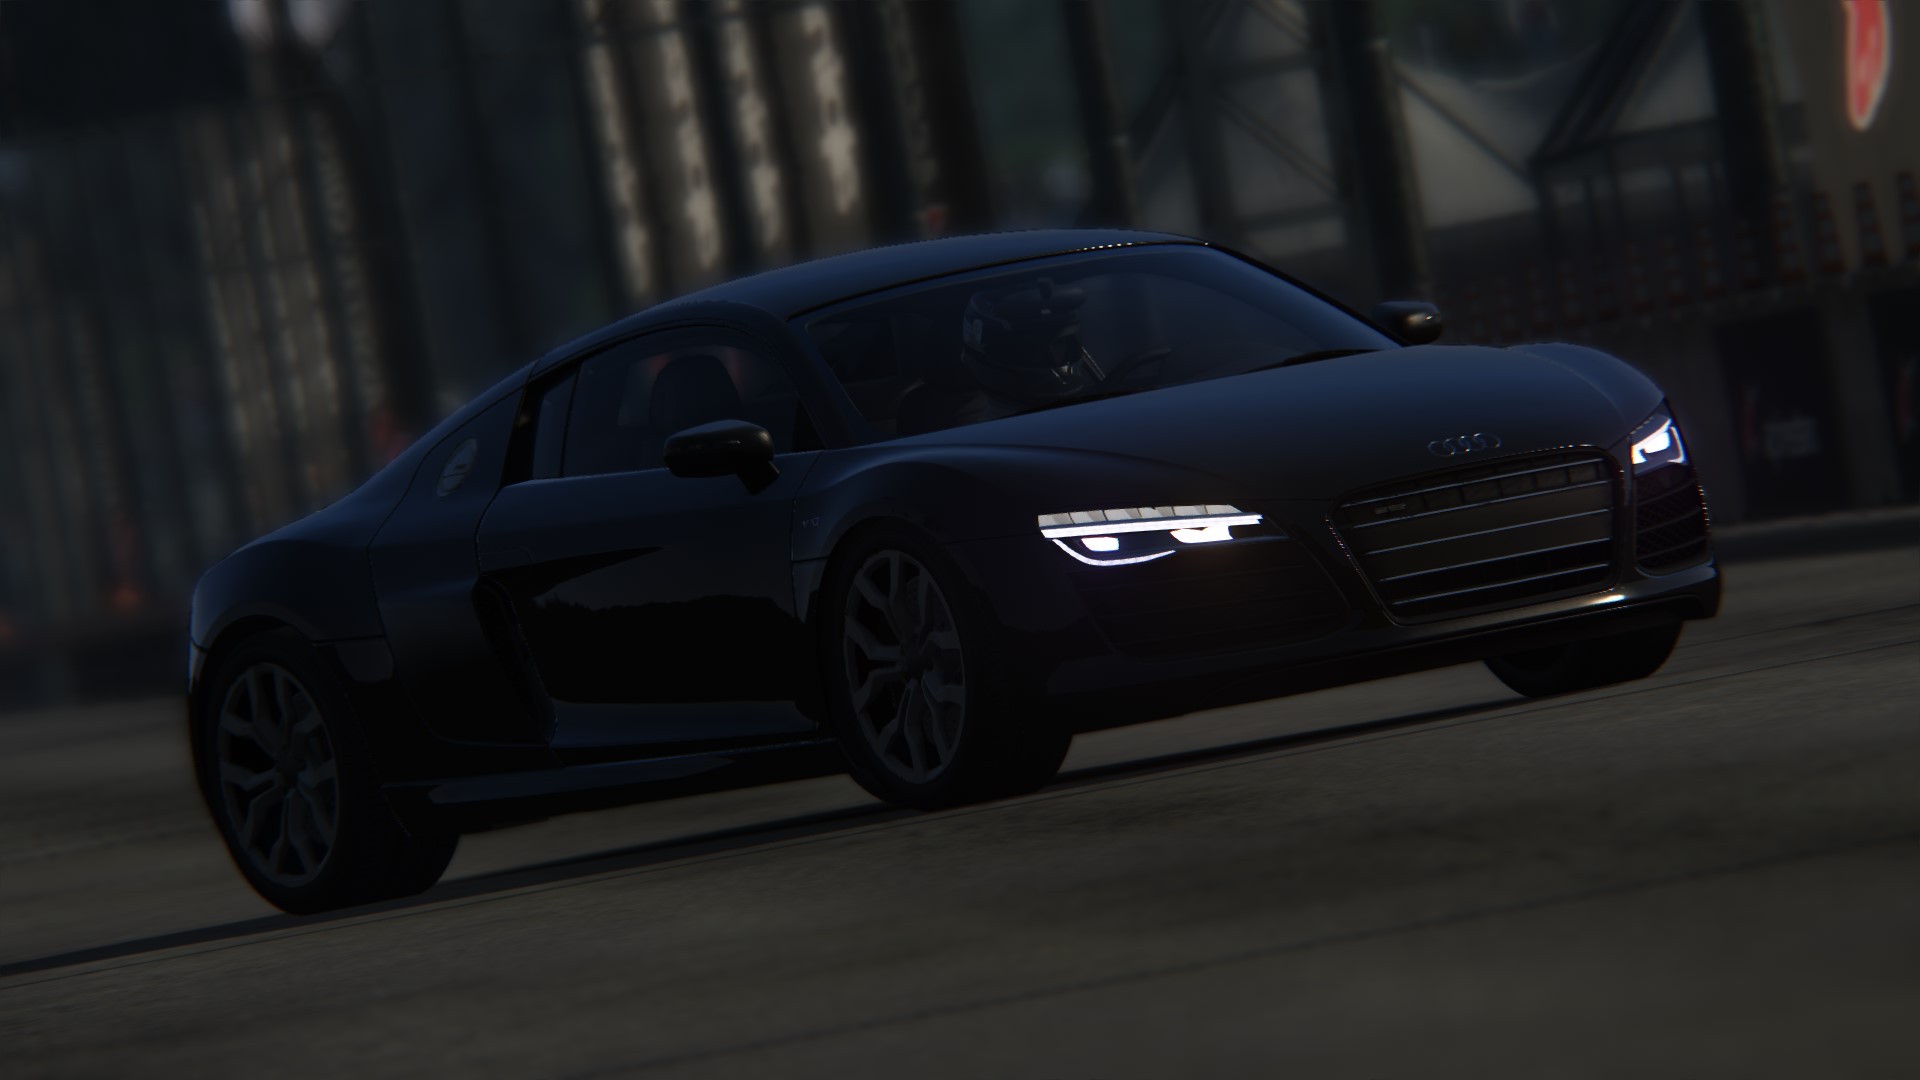 General 1920x1080 Audi Assetto Corsa drag racing video games car vehicle screen shot PC gaming black cars